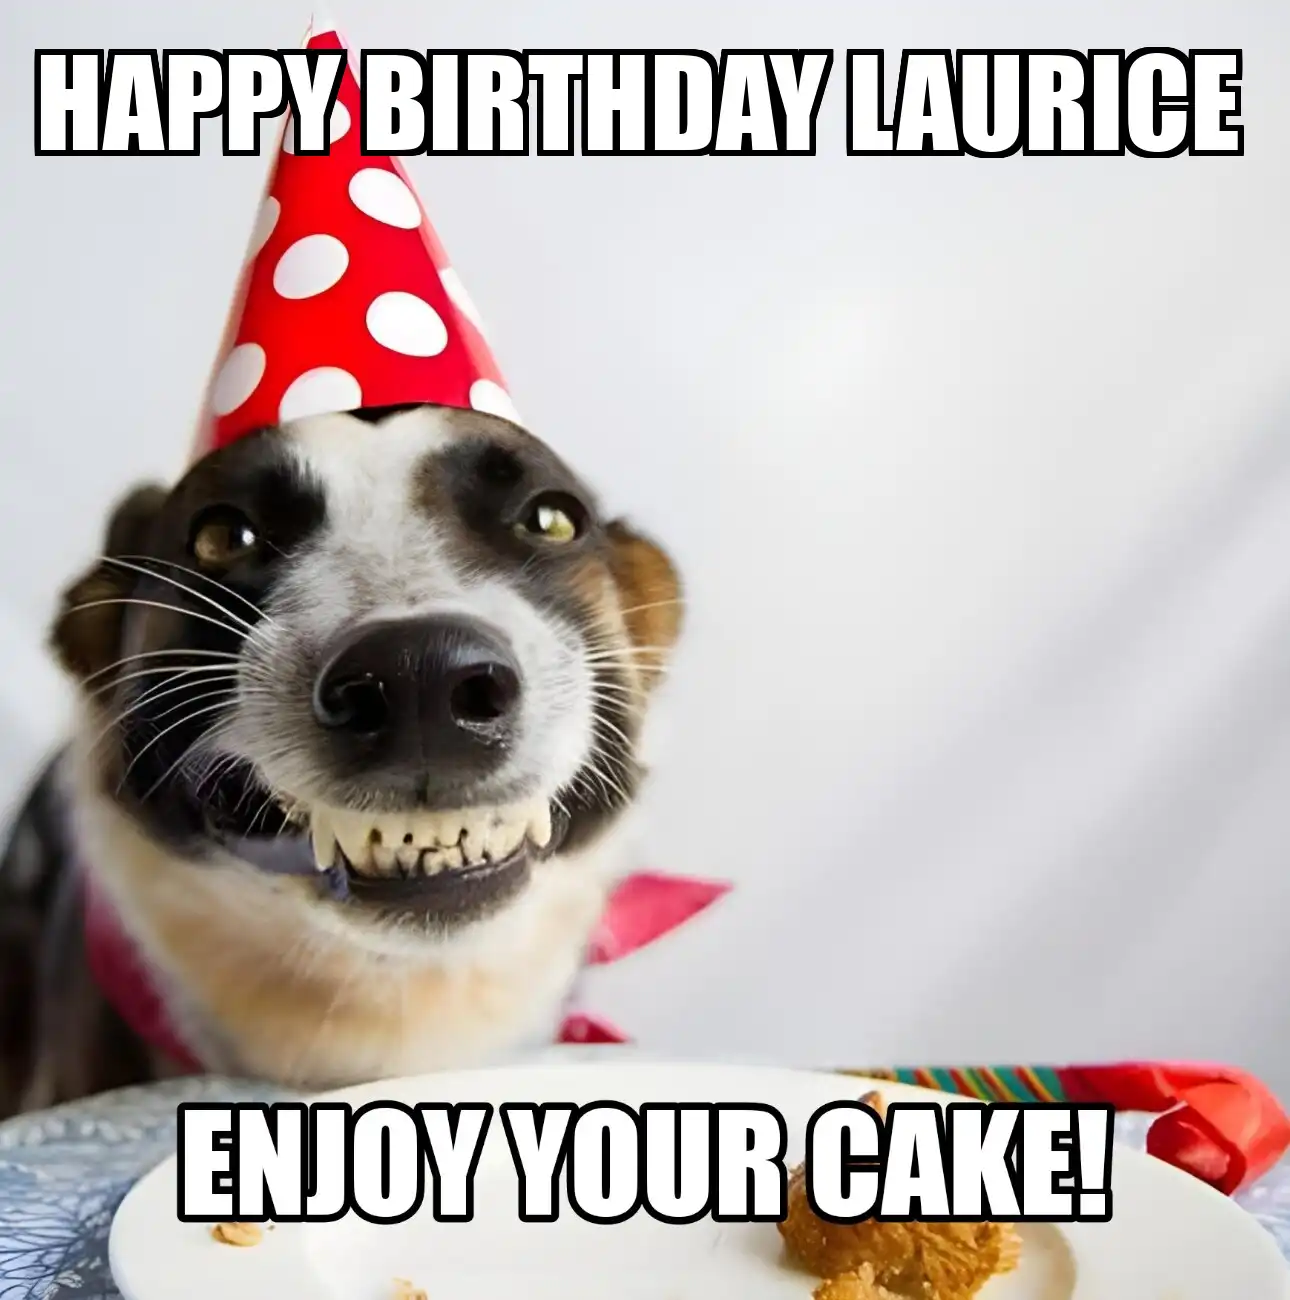 Happy Birthday Laurice Enjoy Your Cake Dog Meme